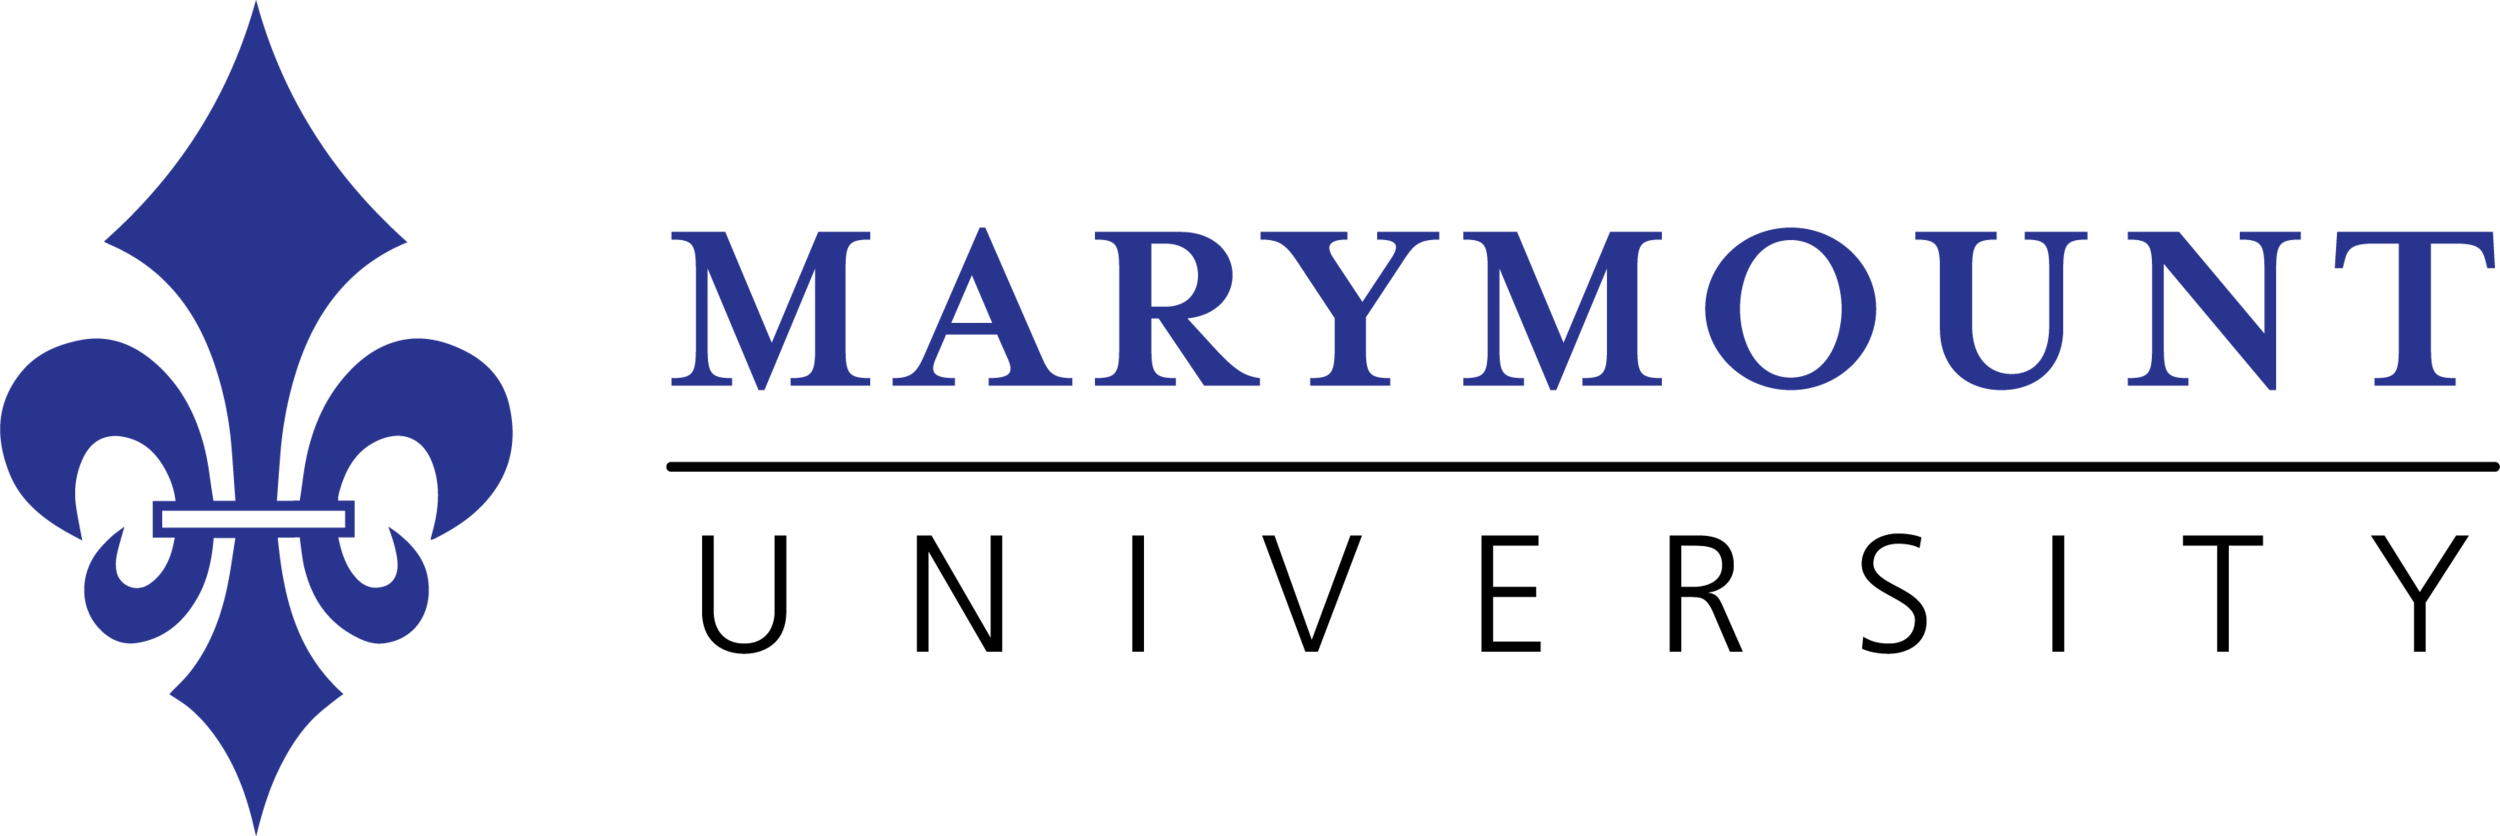 Marymount Univ. логотип